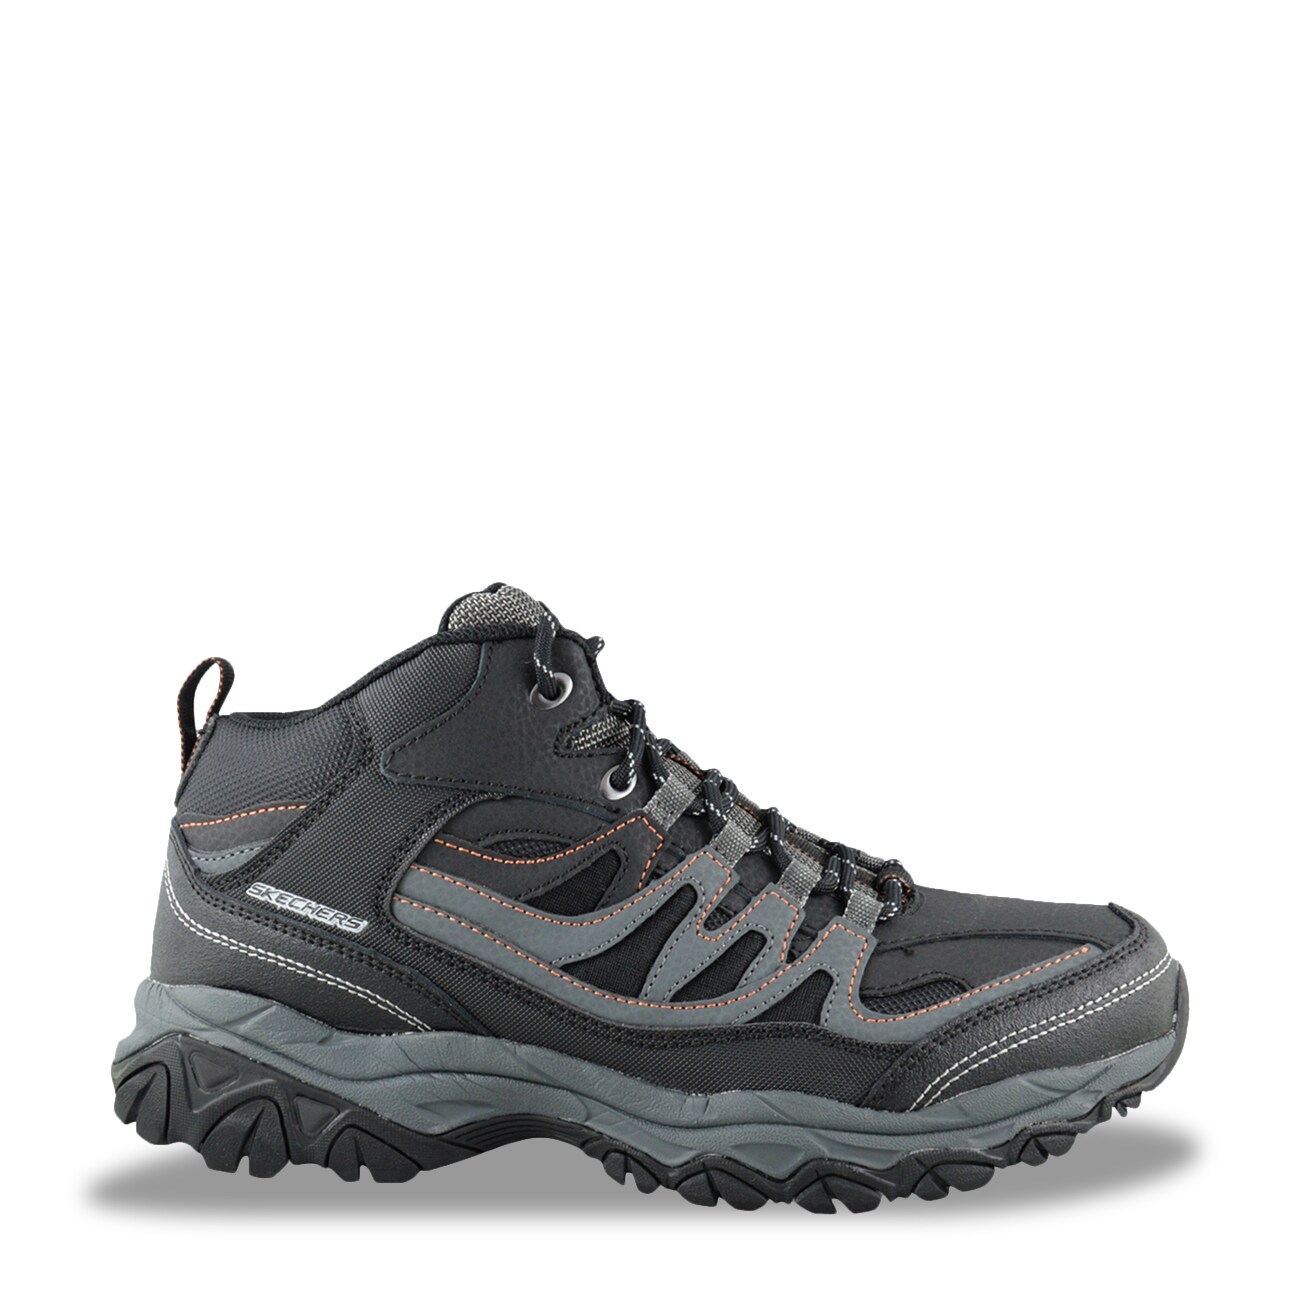 Skechers Men's After Burn Geardo Hiking Boot | The Shoe Company